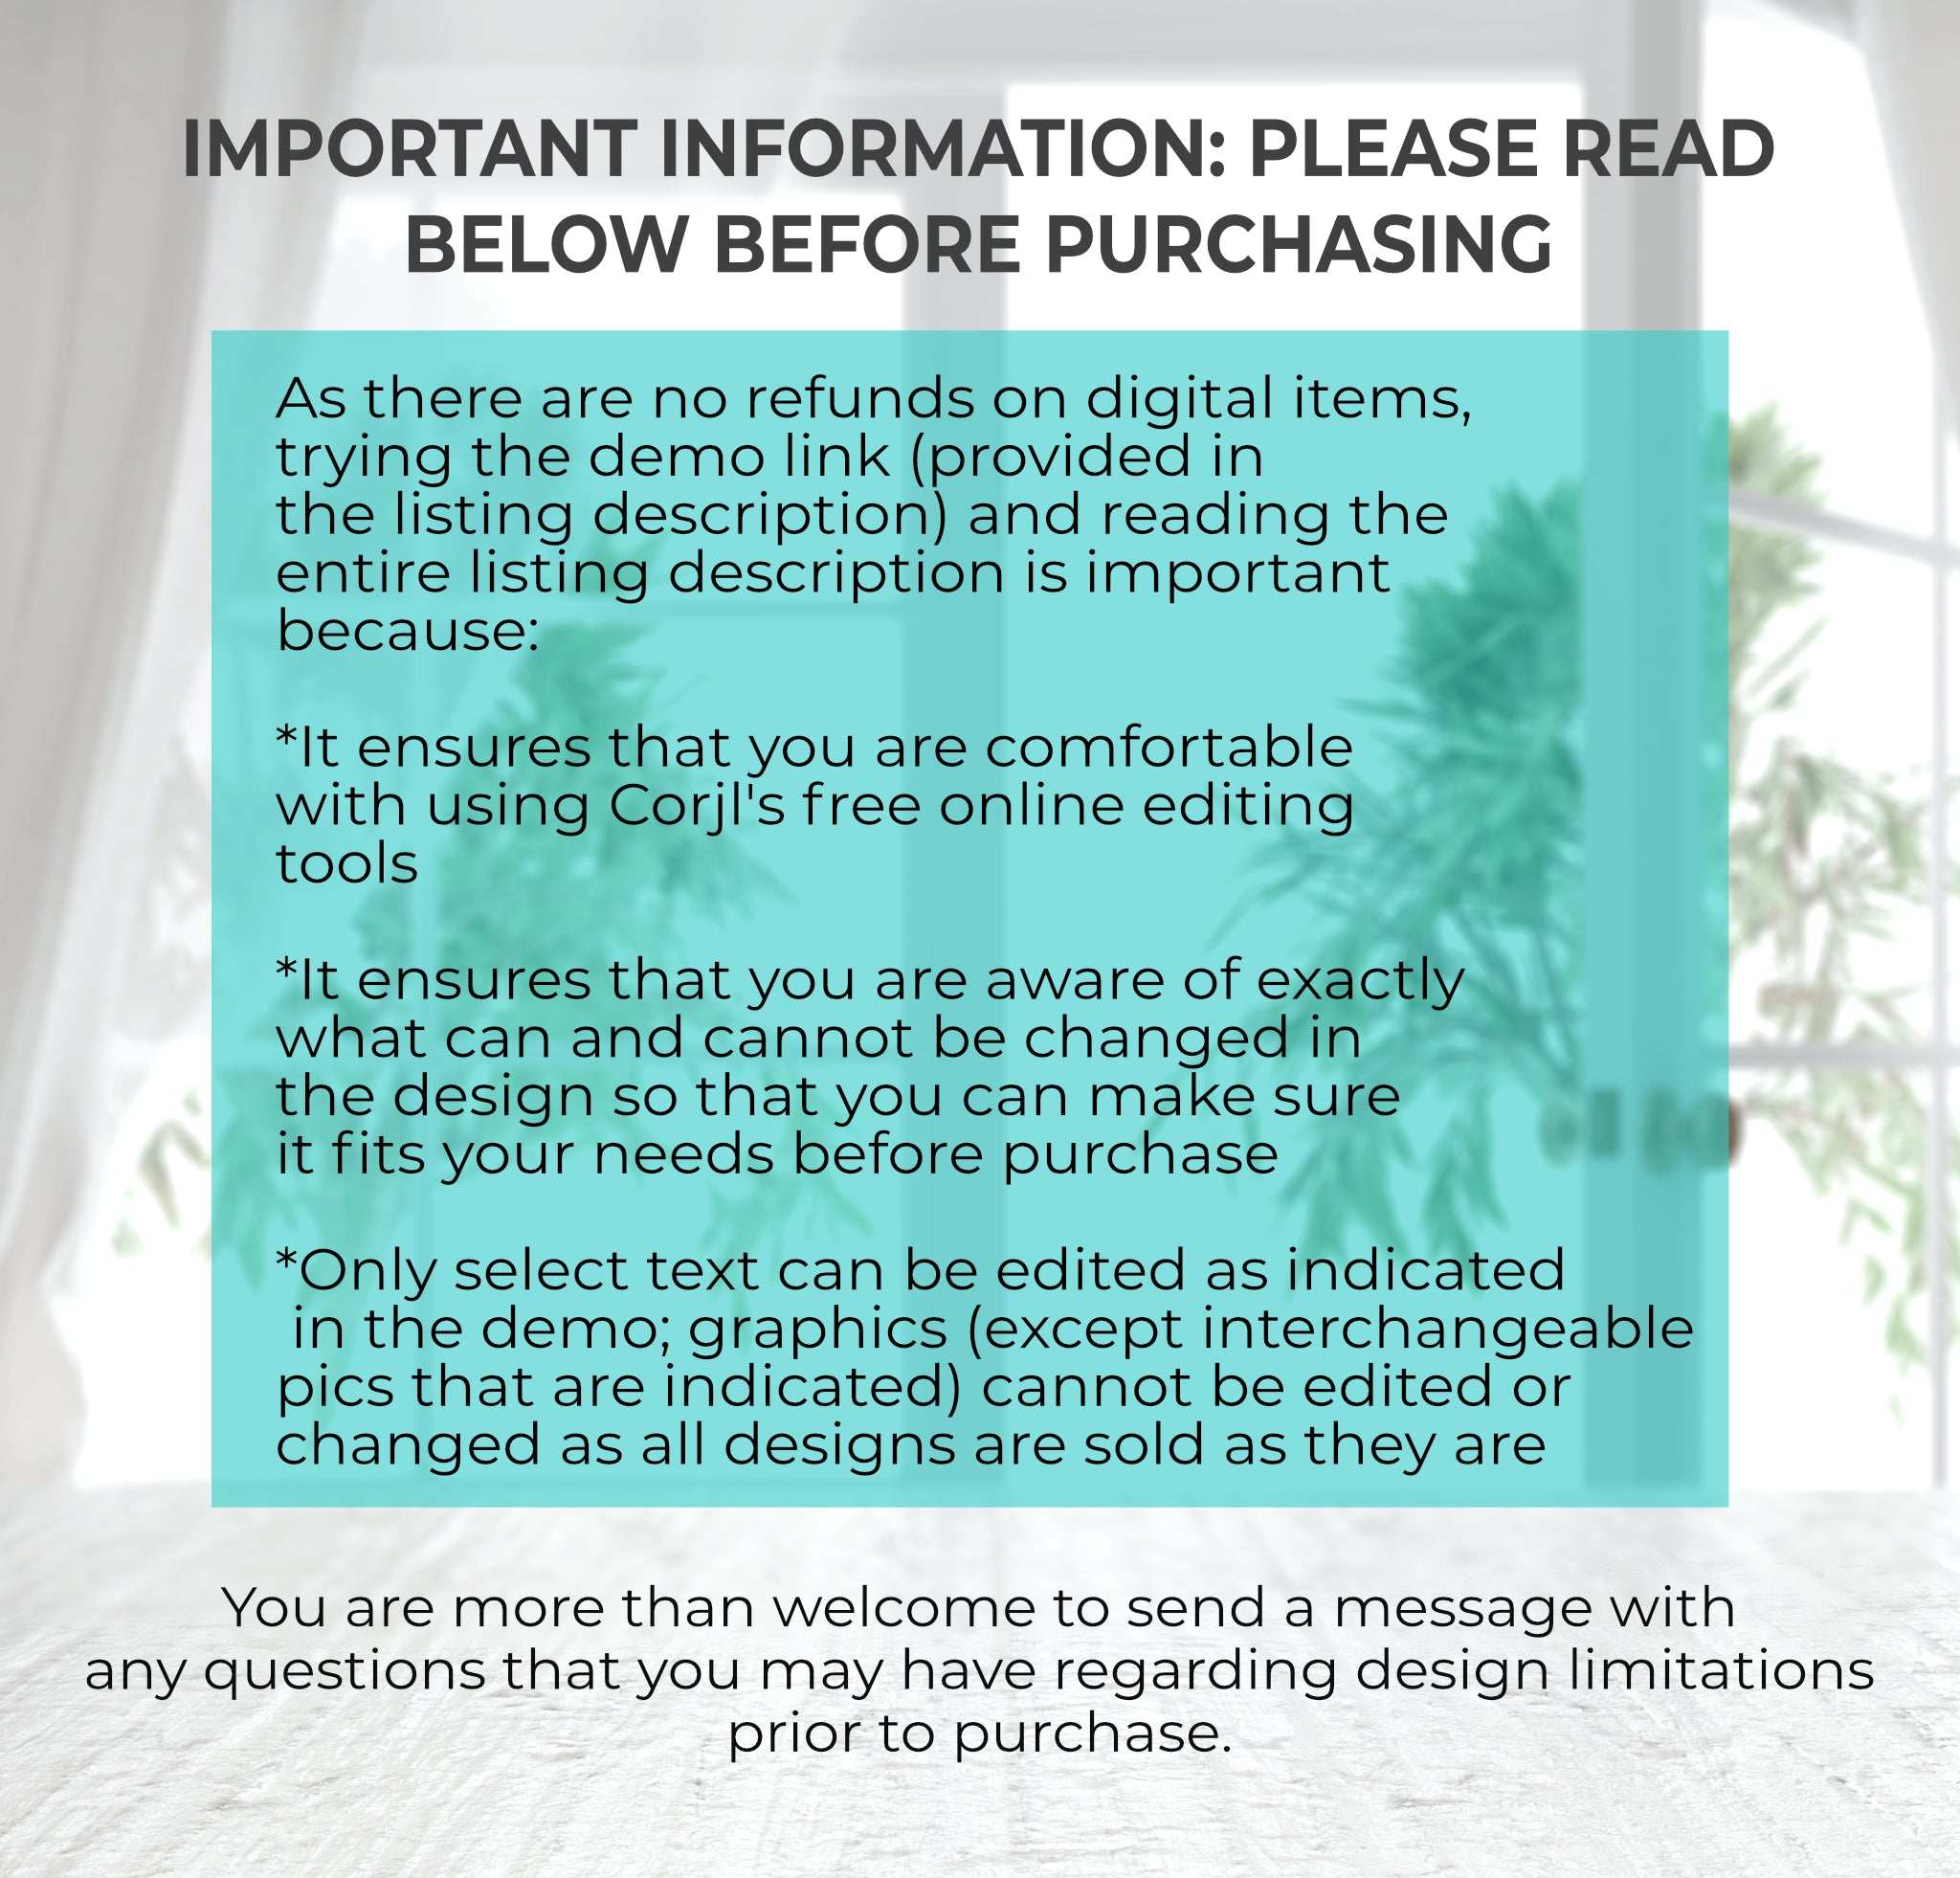 Printable Boy Teddy Bear Baby Shower Gift Bag Label 5x8 Instructions